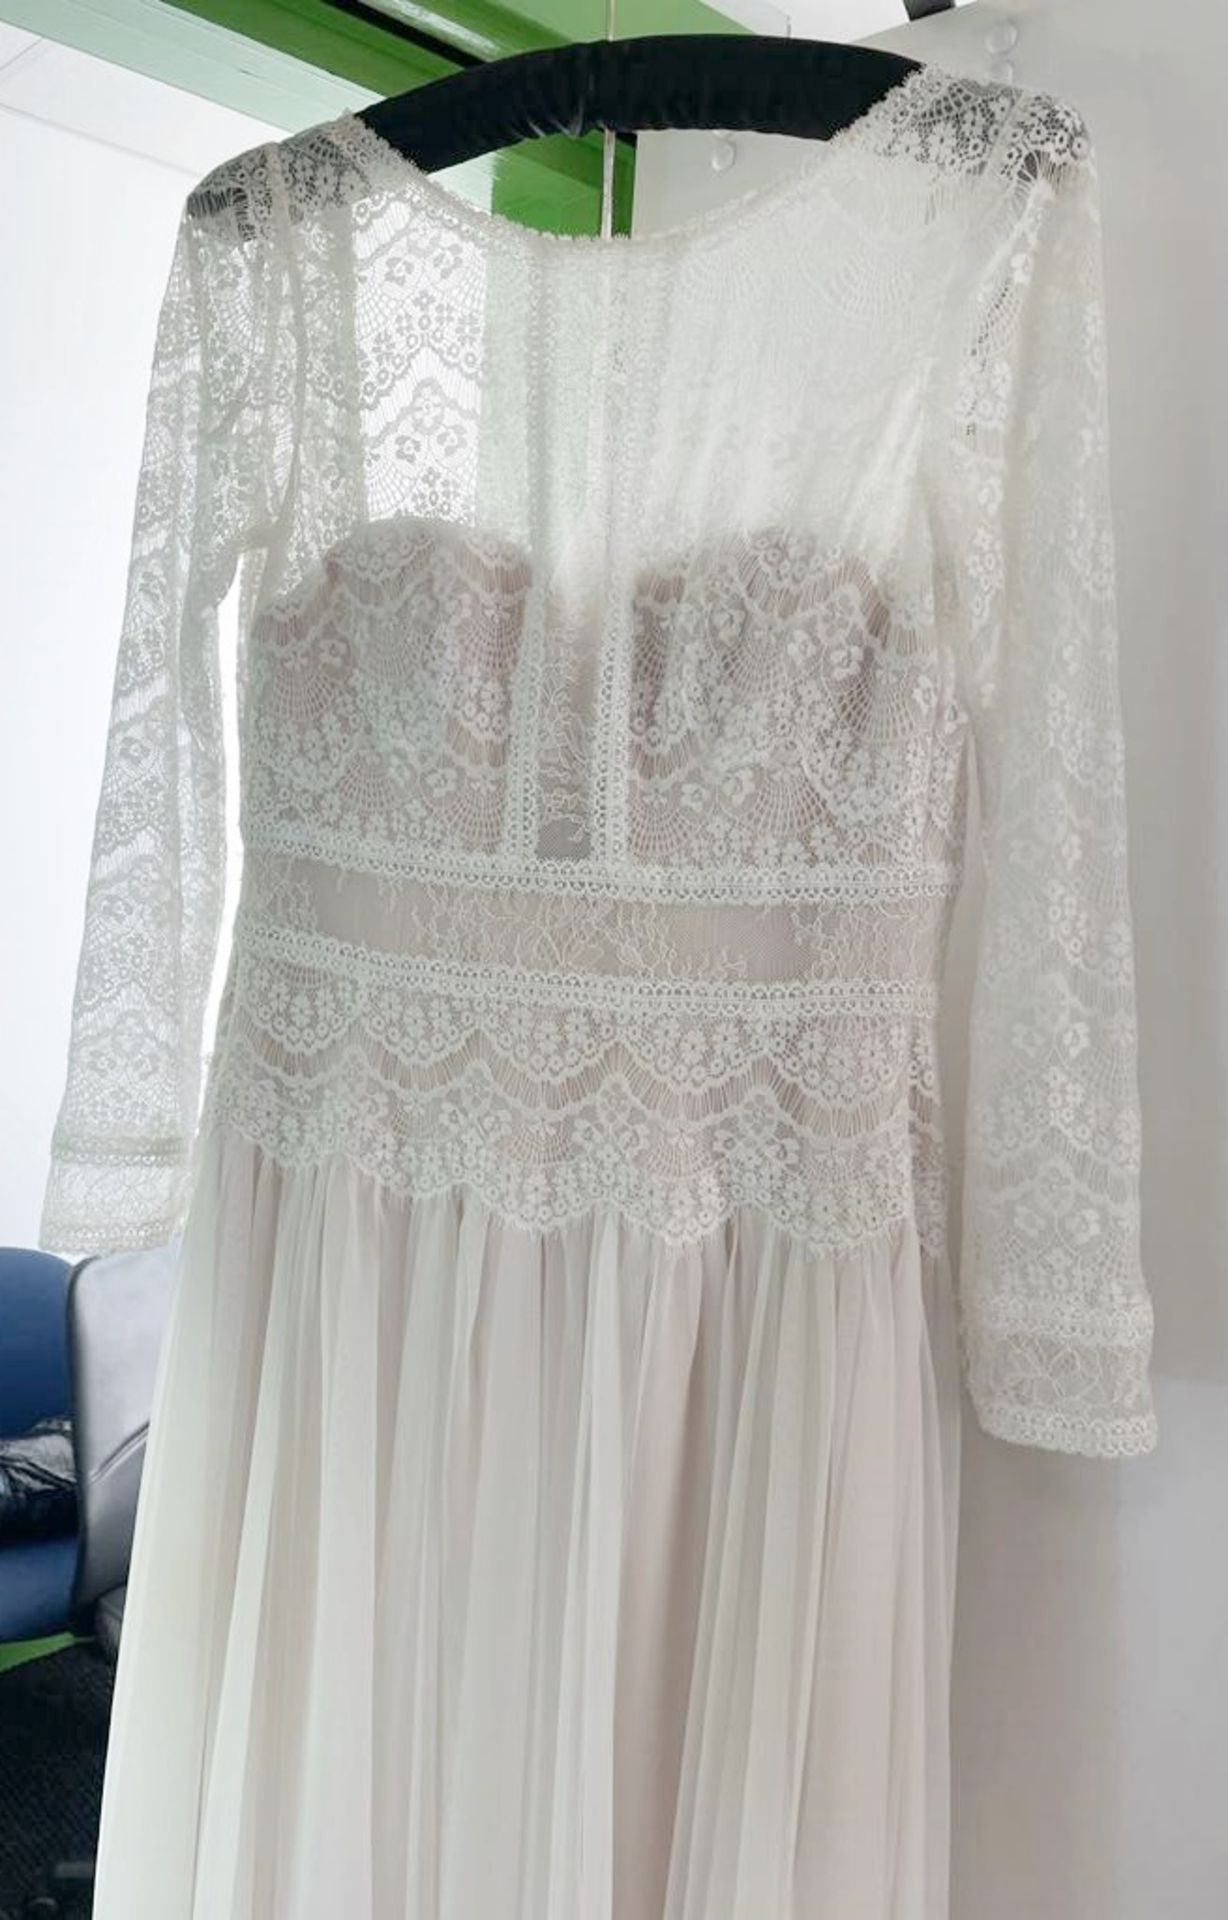 1 x MAGGIE SOTTERO 'Deirdre' Designer Wedding Dress Bridal Gown - Size: UK 10 - Original RRP £15,060 - Image 5 of 11